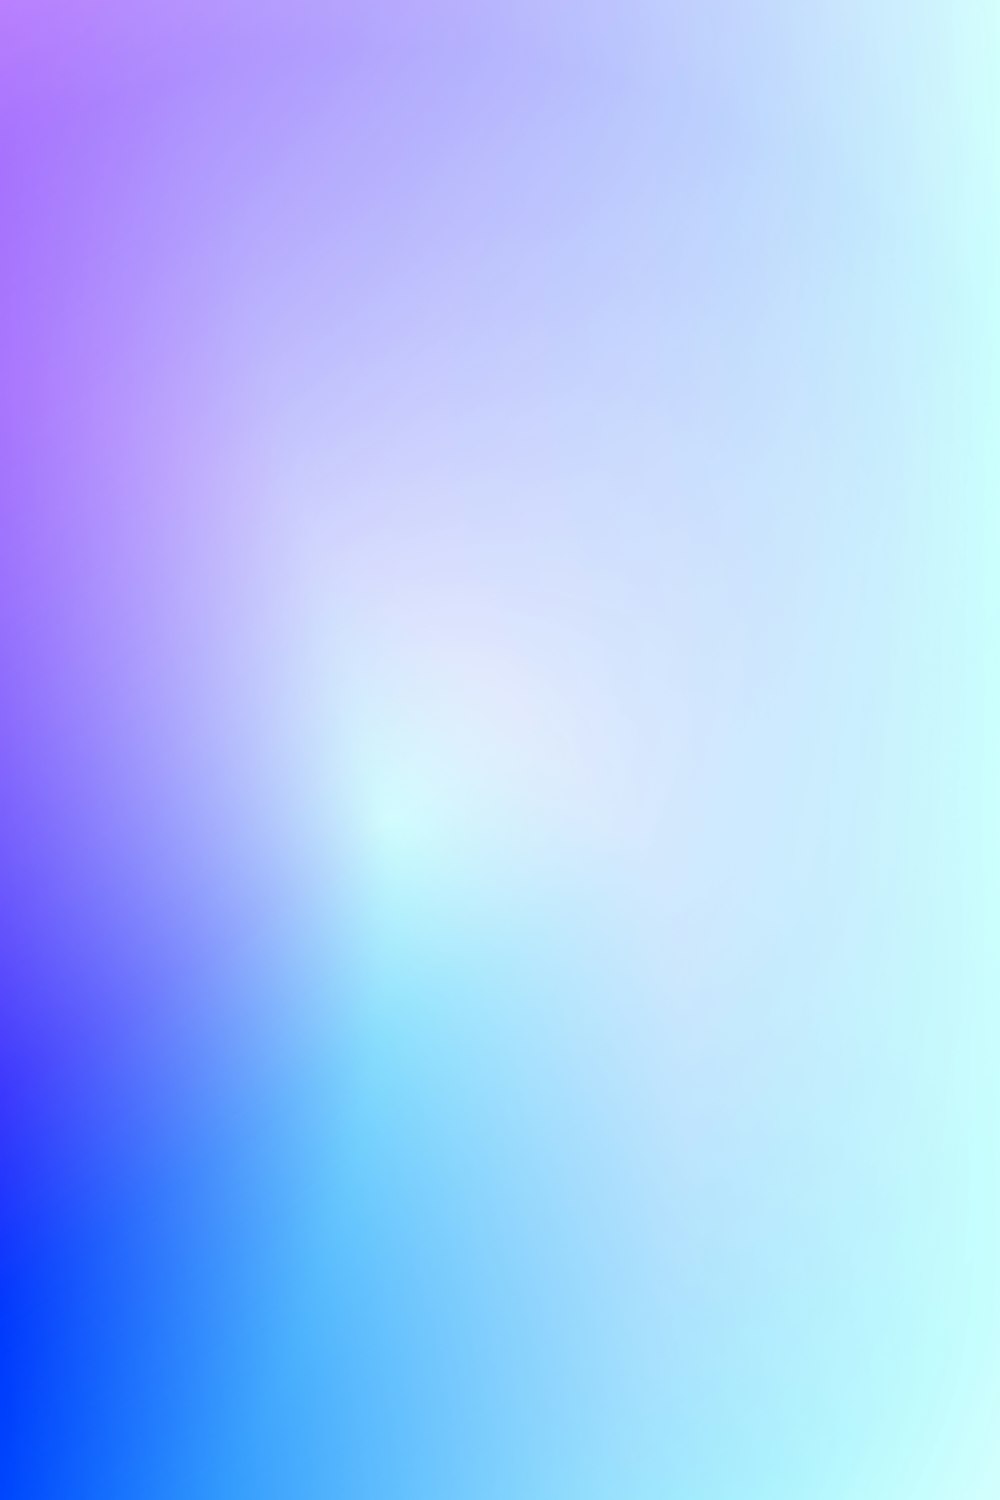 blue and purple light illustration